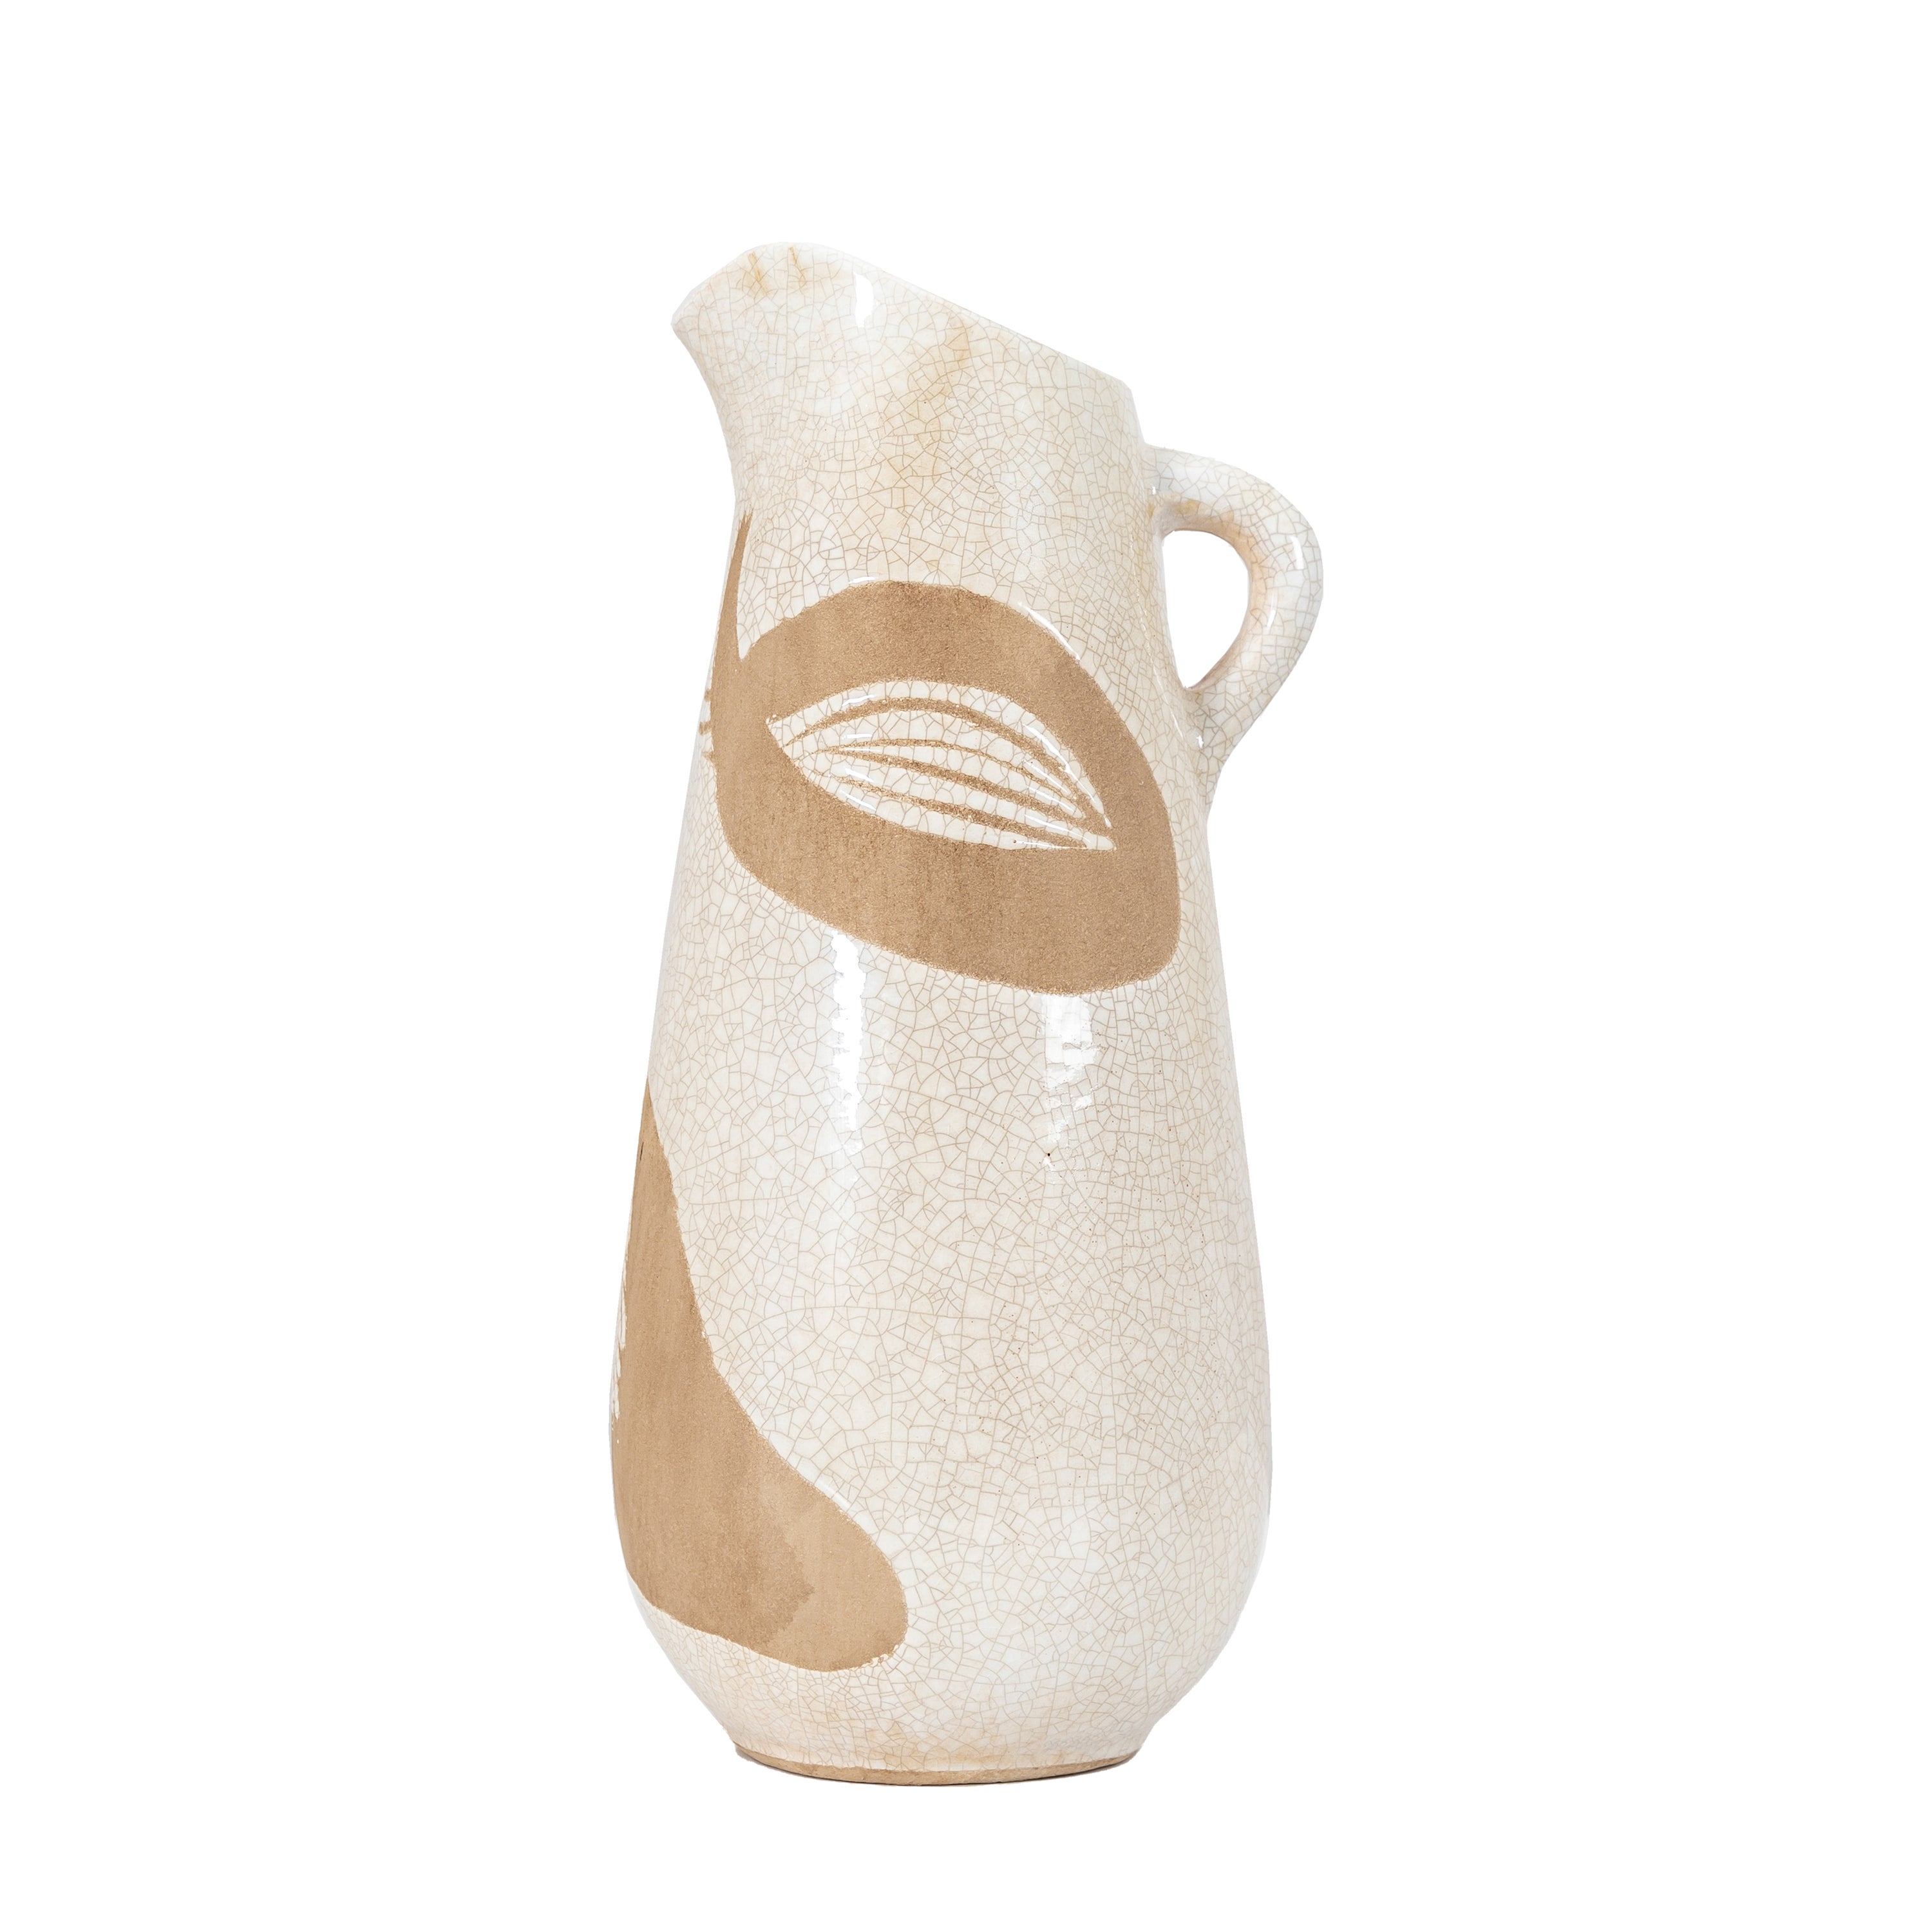 Colly Reactive Striped Stoneware Jug Vase Brown